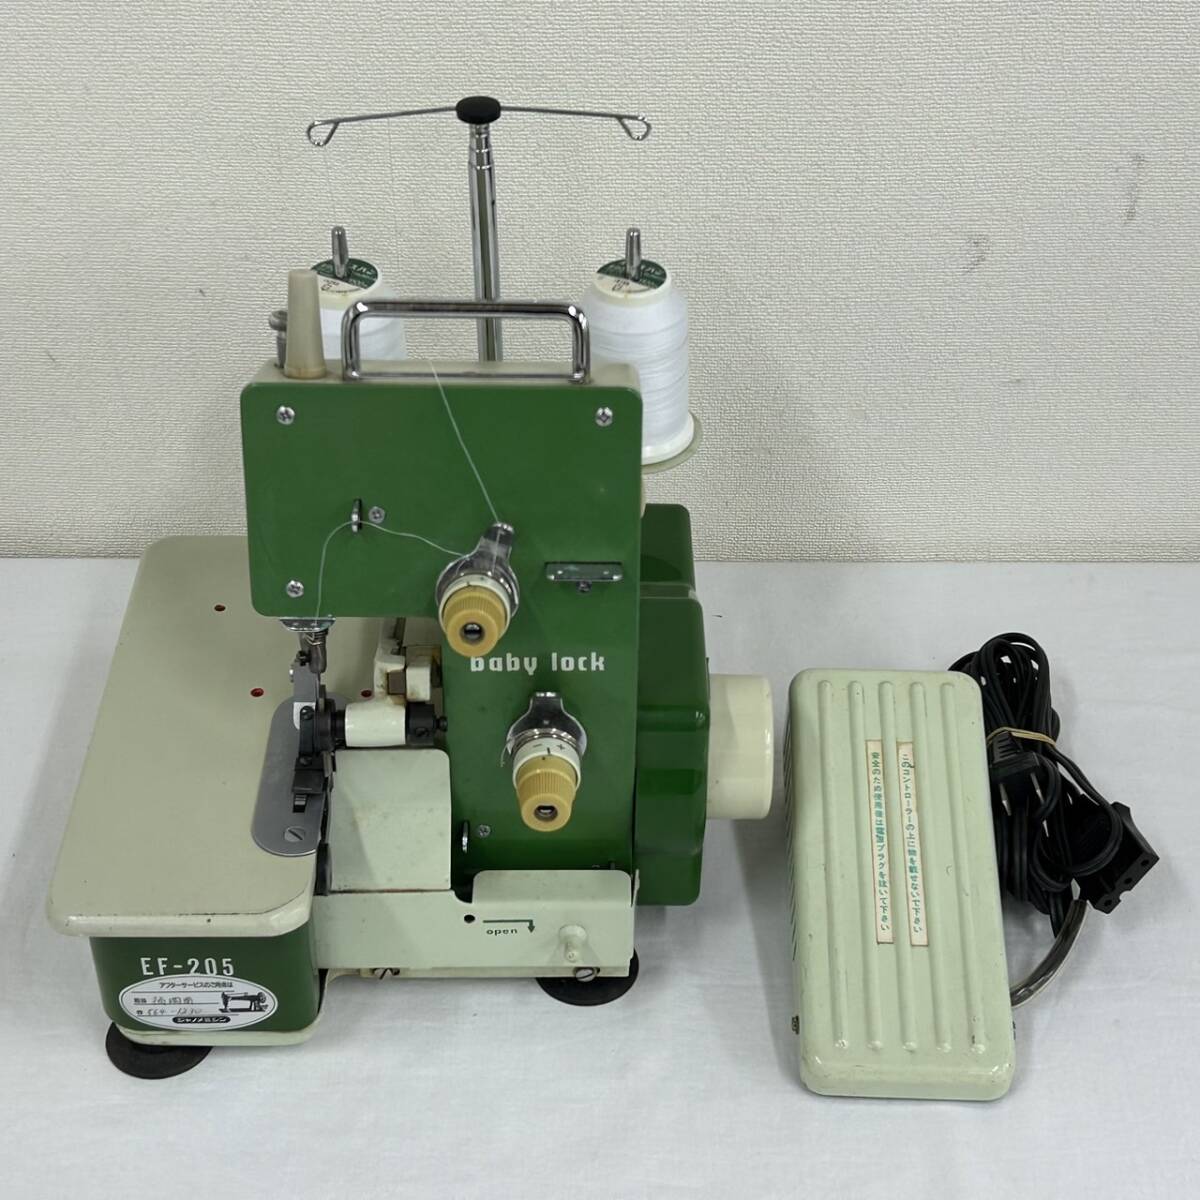 LB100287(061)-301/IR9000[ Nagoya ]JUKI Juki EF-205 baby lock швейная машина 